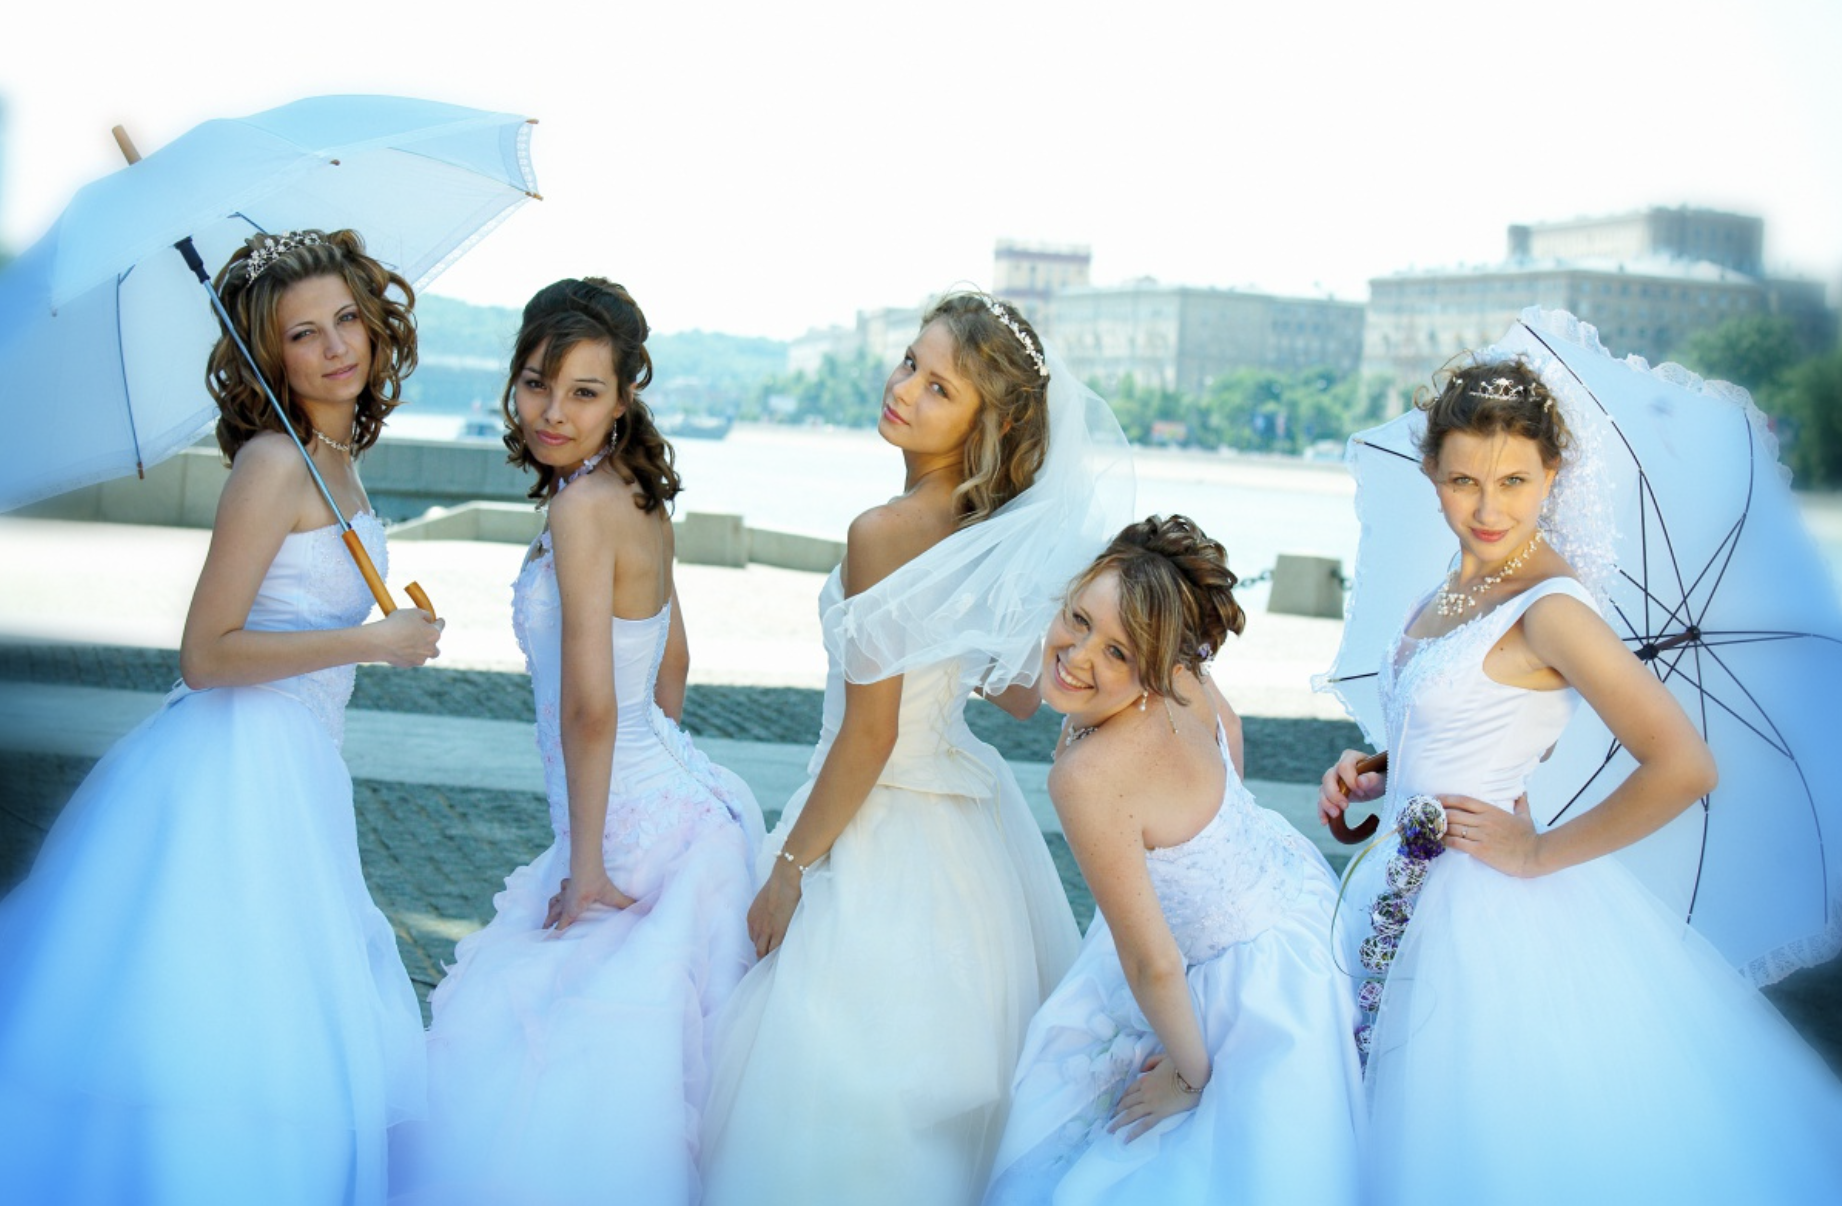 Five brides | Source: Shutterstock